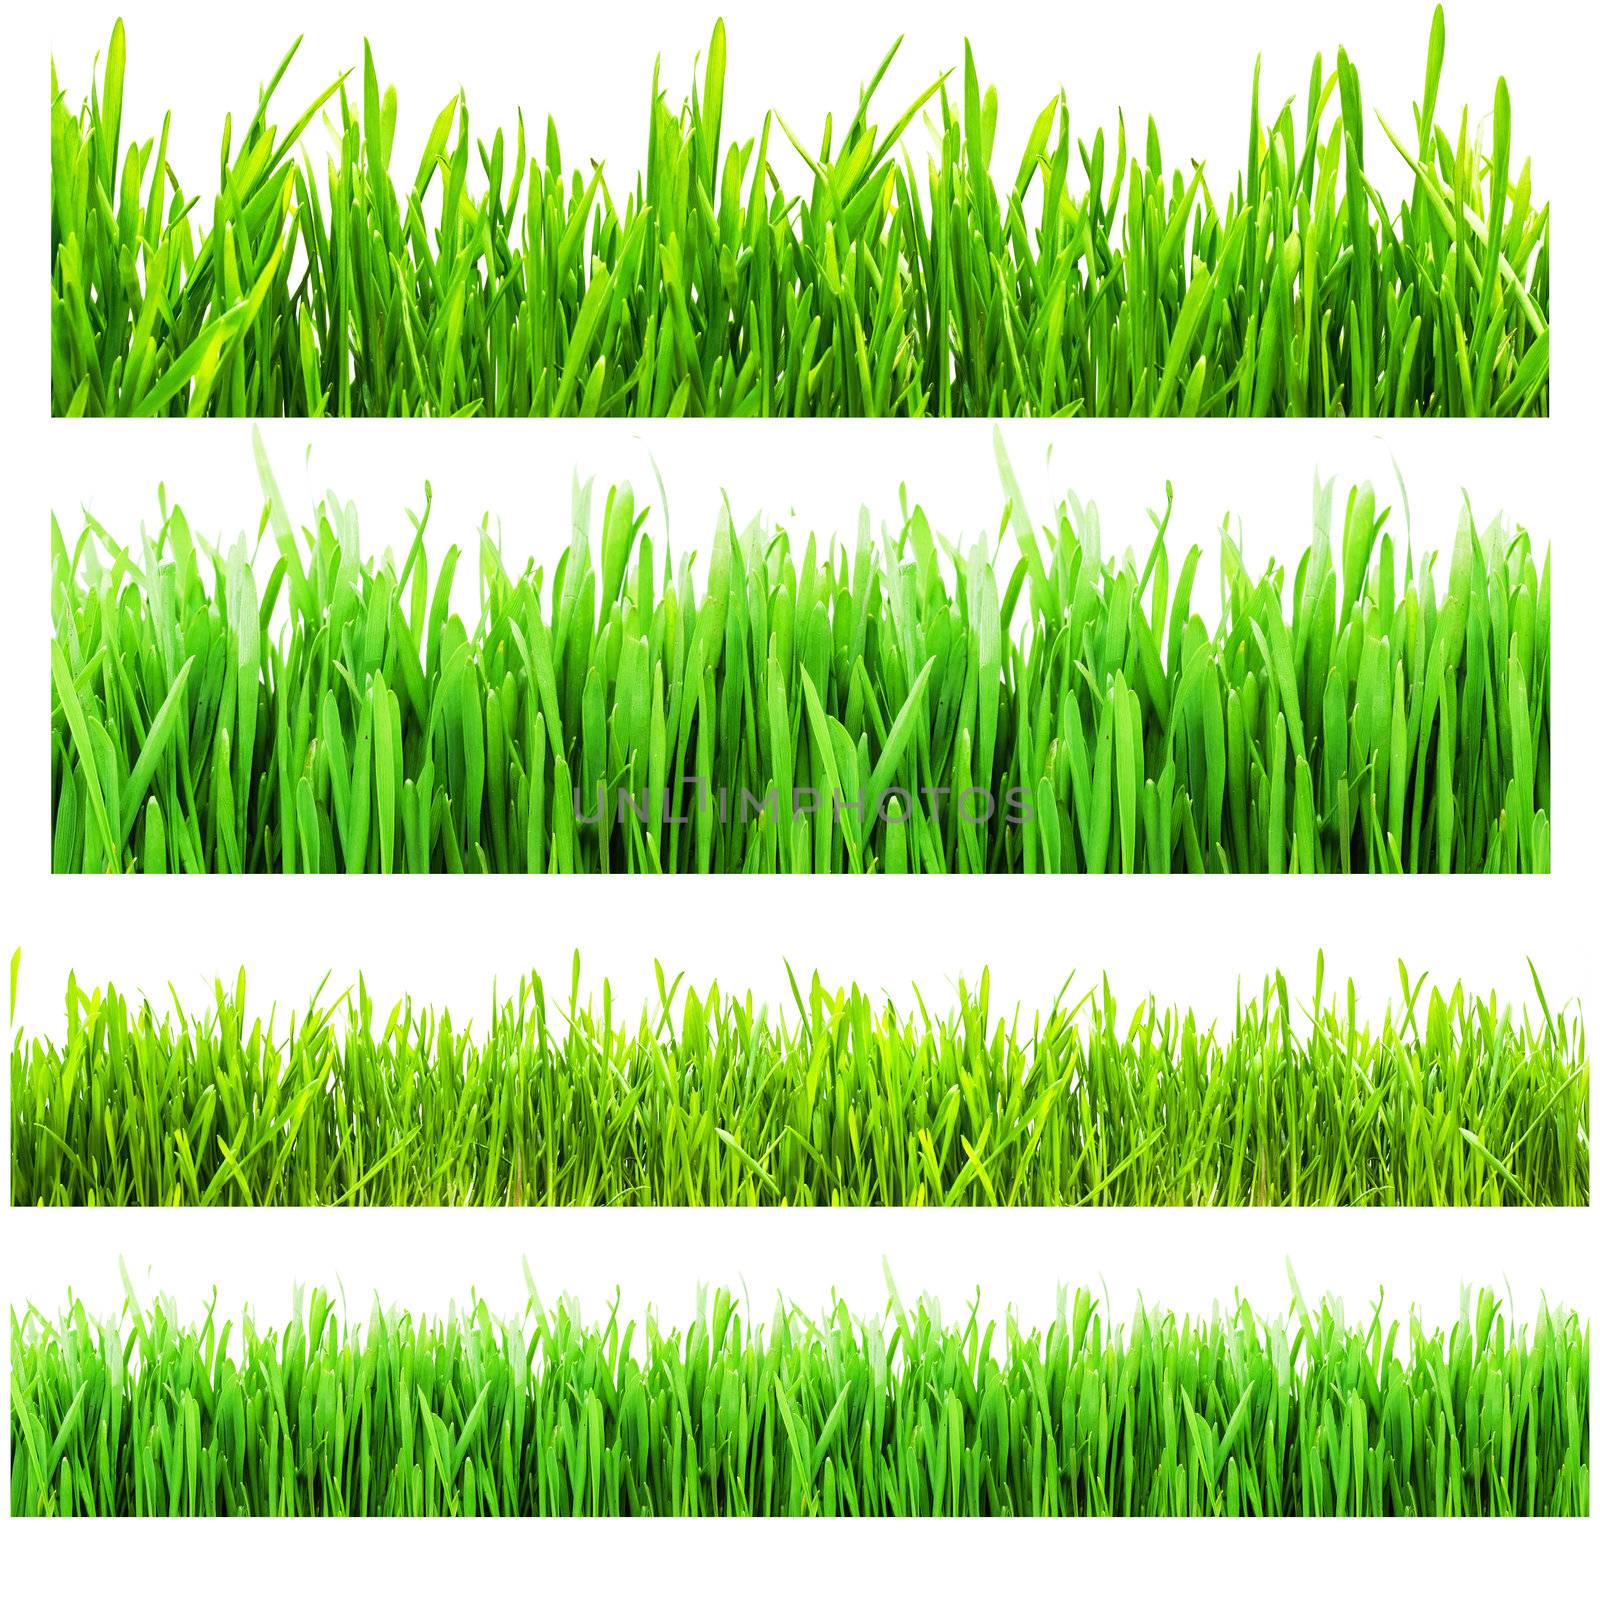 Grass by sailorr